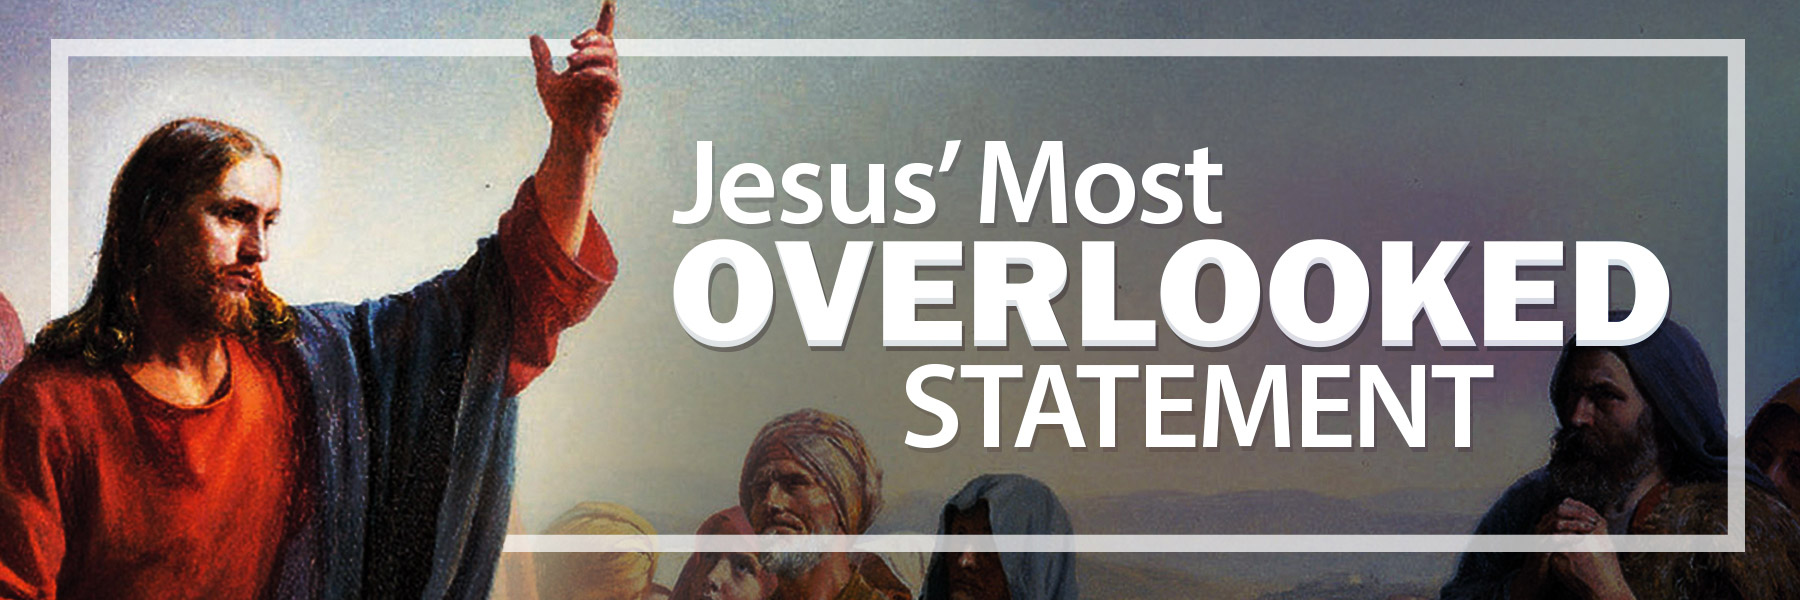 Jesus’ Most Overlooked Statement